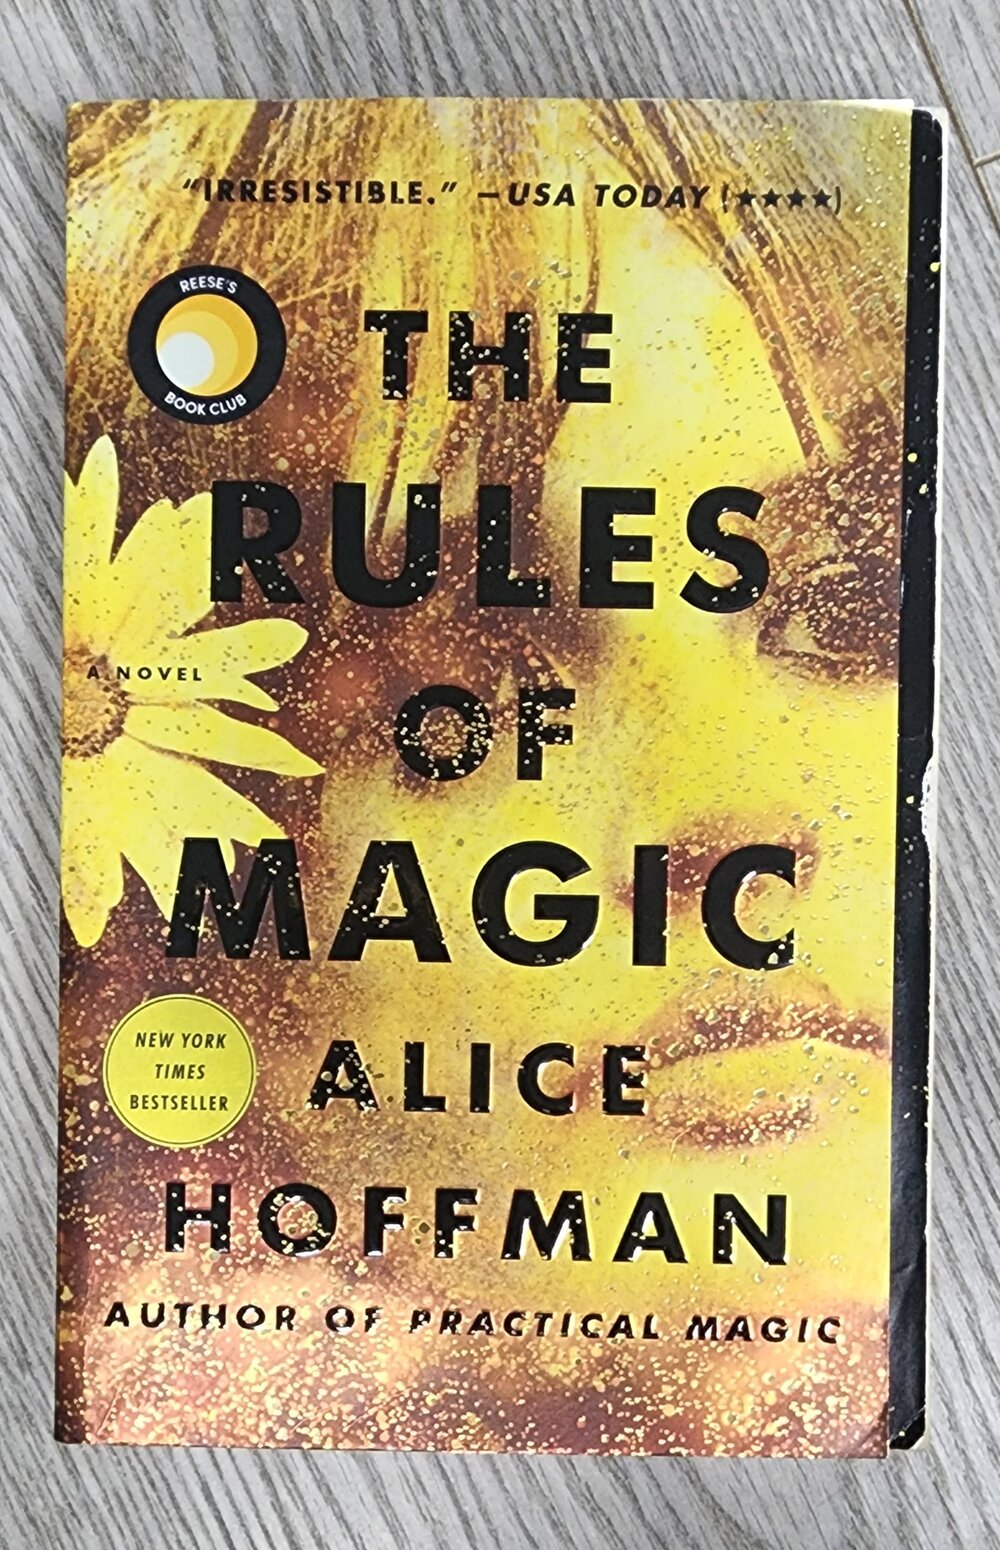 The Rules of Magic: A Novel [Book]